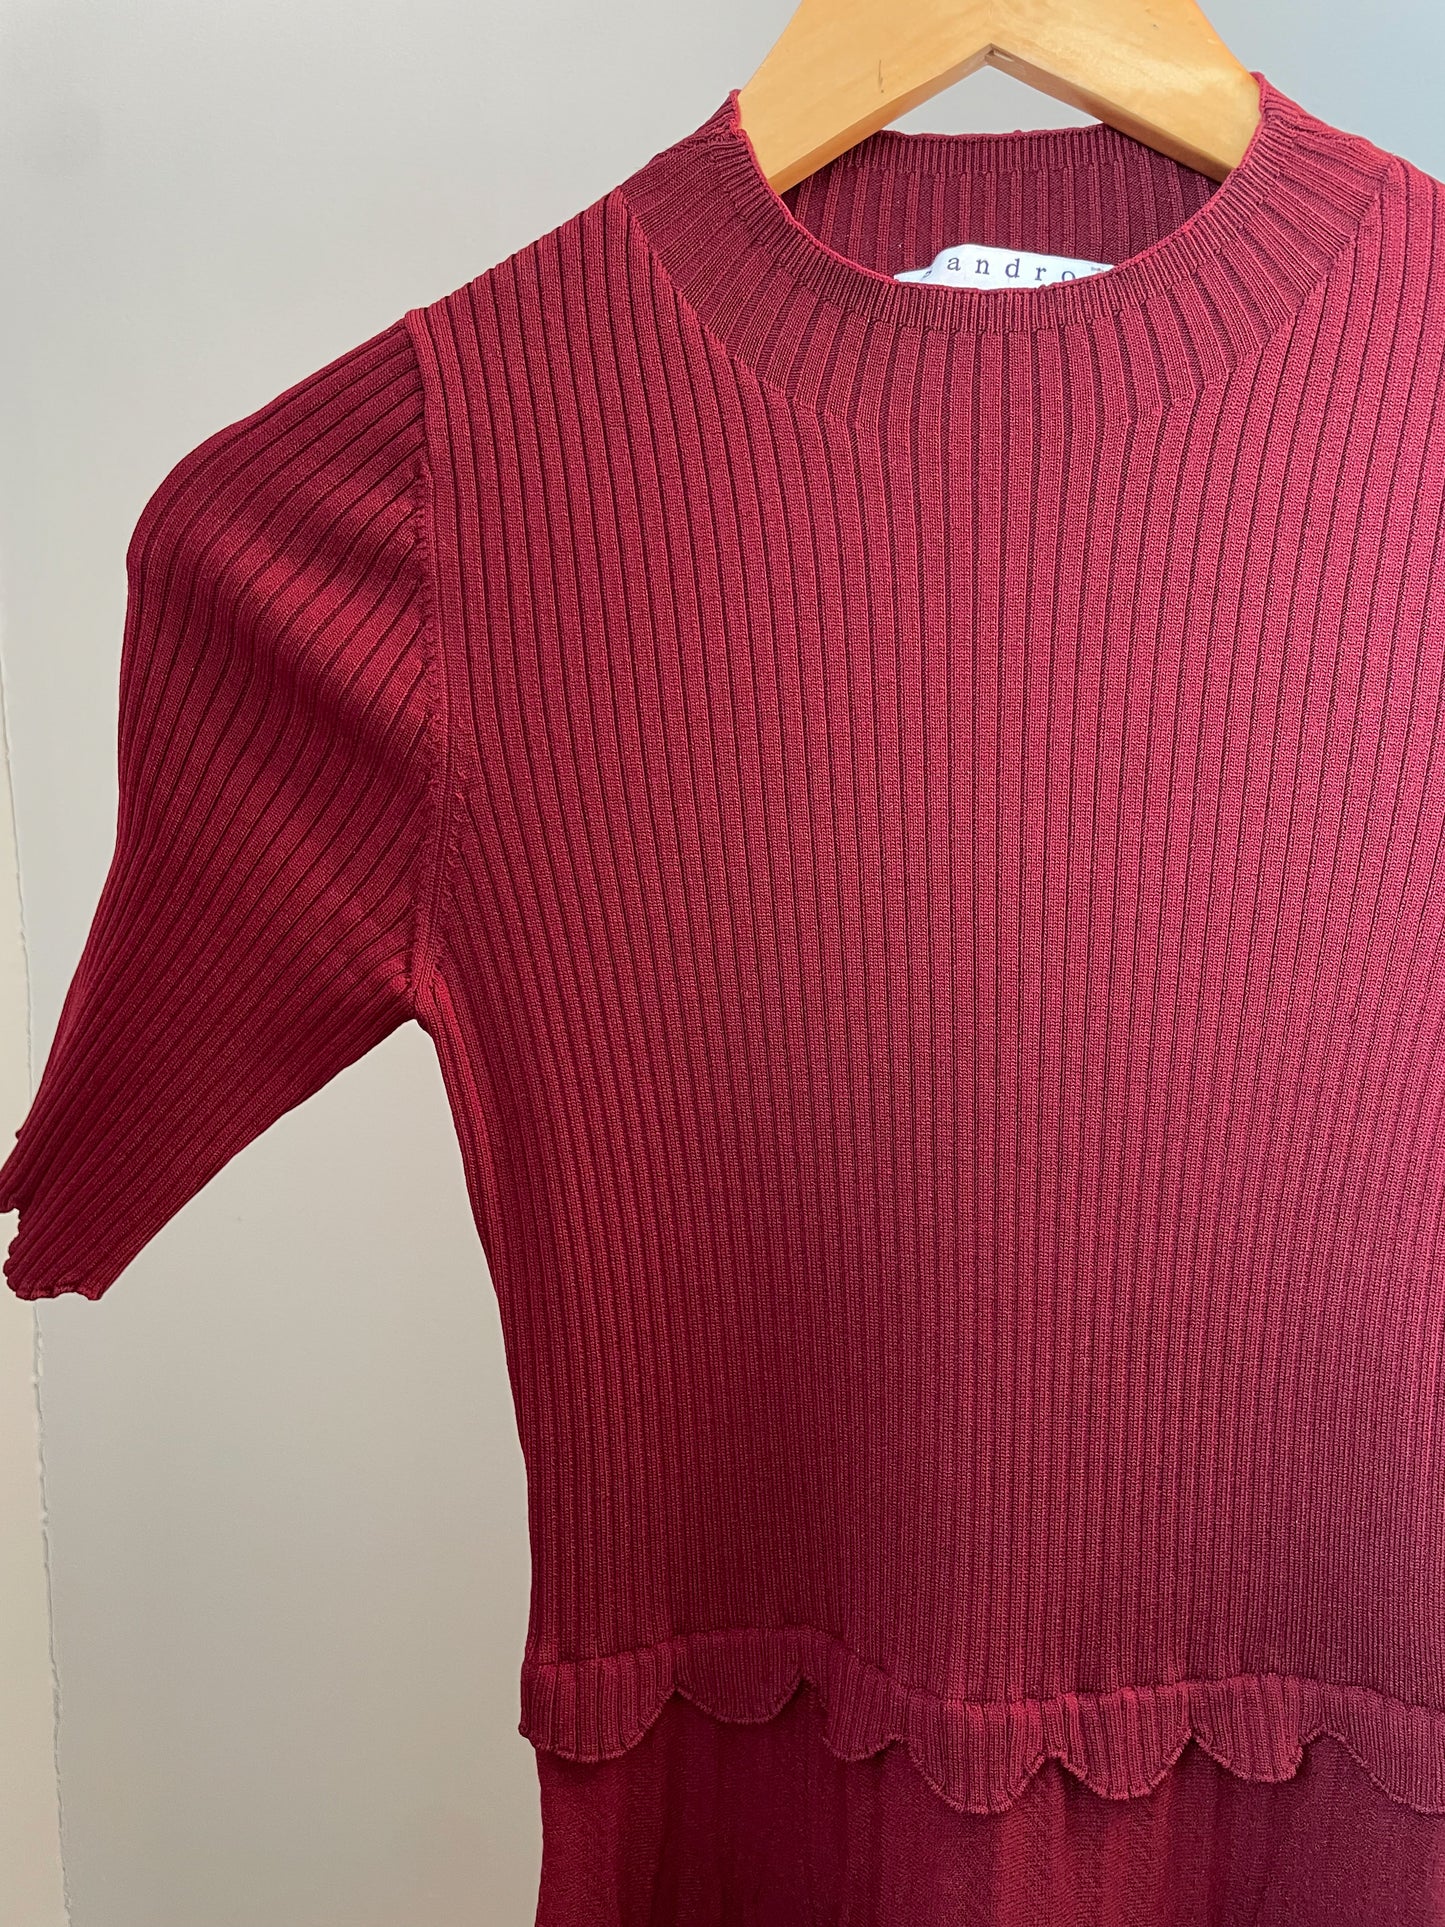 Sandro Paris Wine Red Mock Neck Knit Dress - XS